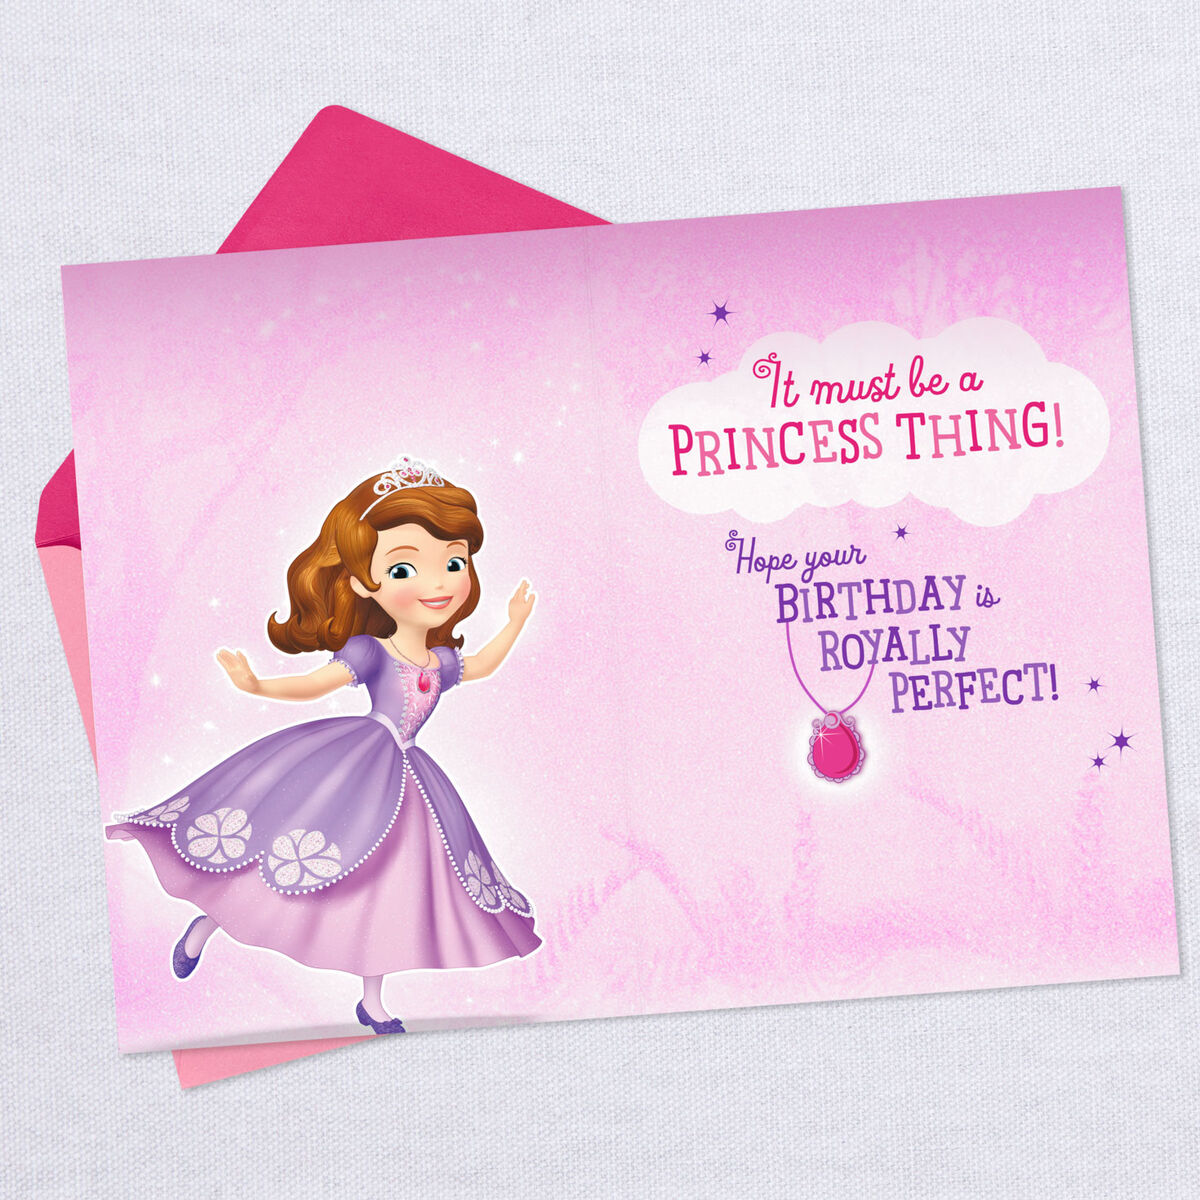 Sofia the First Royally Perfect Birthday Card - Greeting Cards - Hallmark